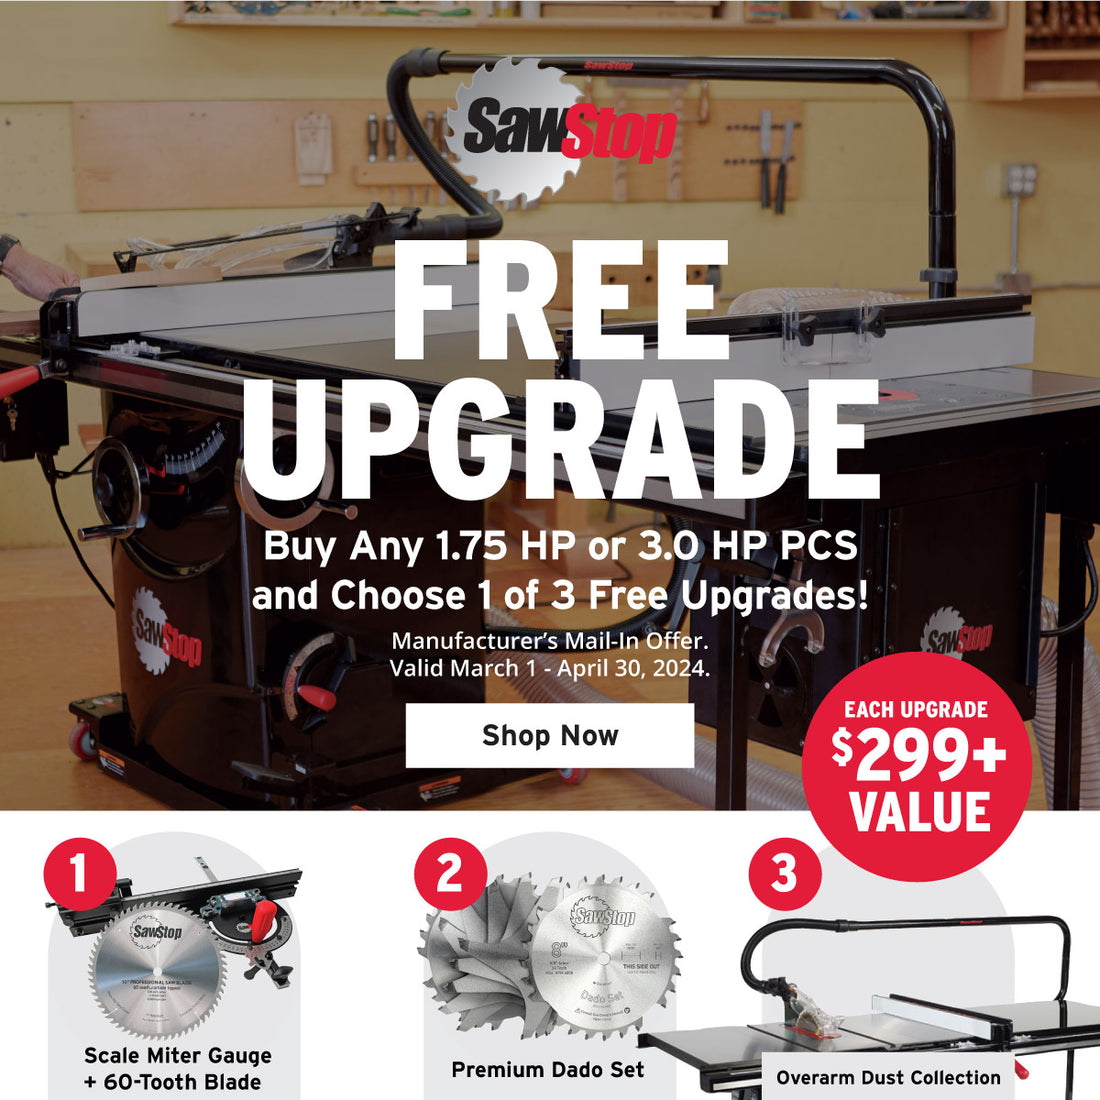 SawStop Free Upgrade. Buy any 1.75 HP or 3.0 HP PCS and choose 1 of 3 free upgrades!